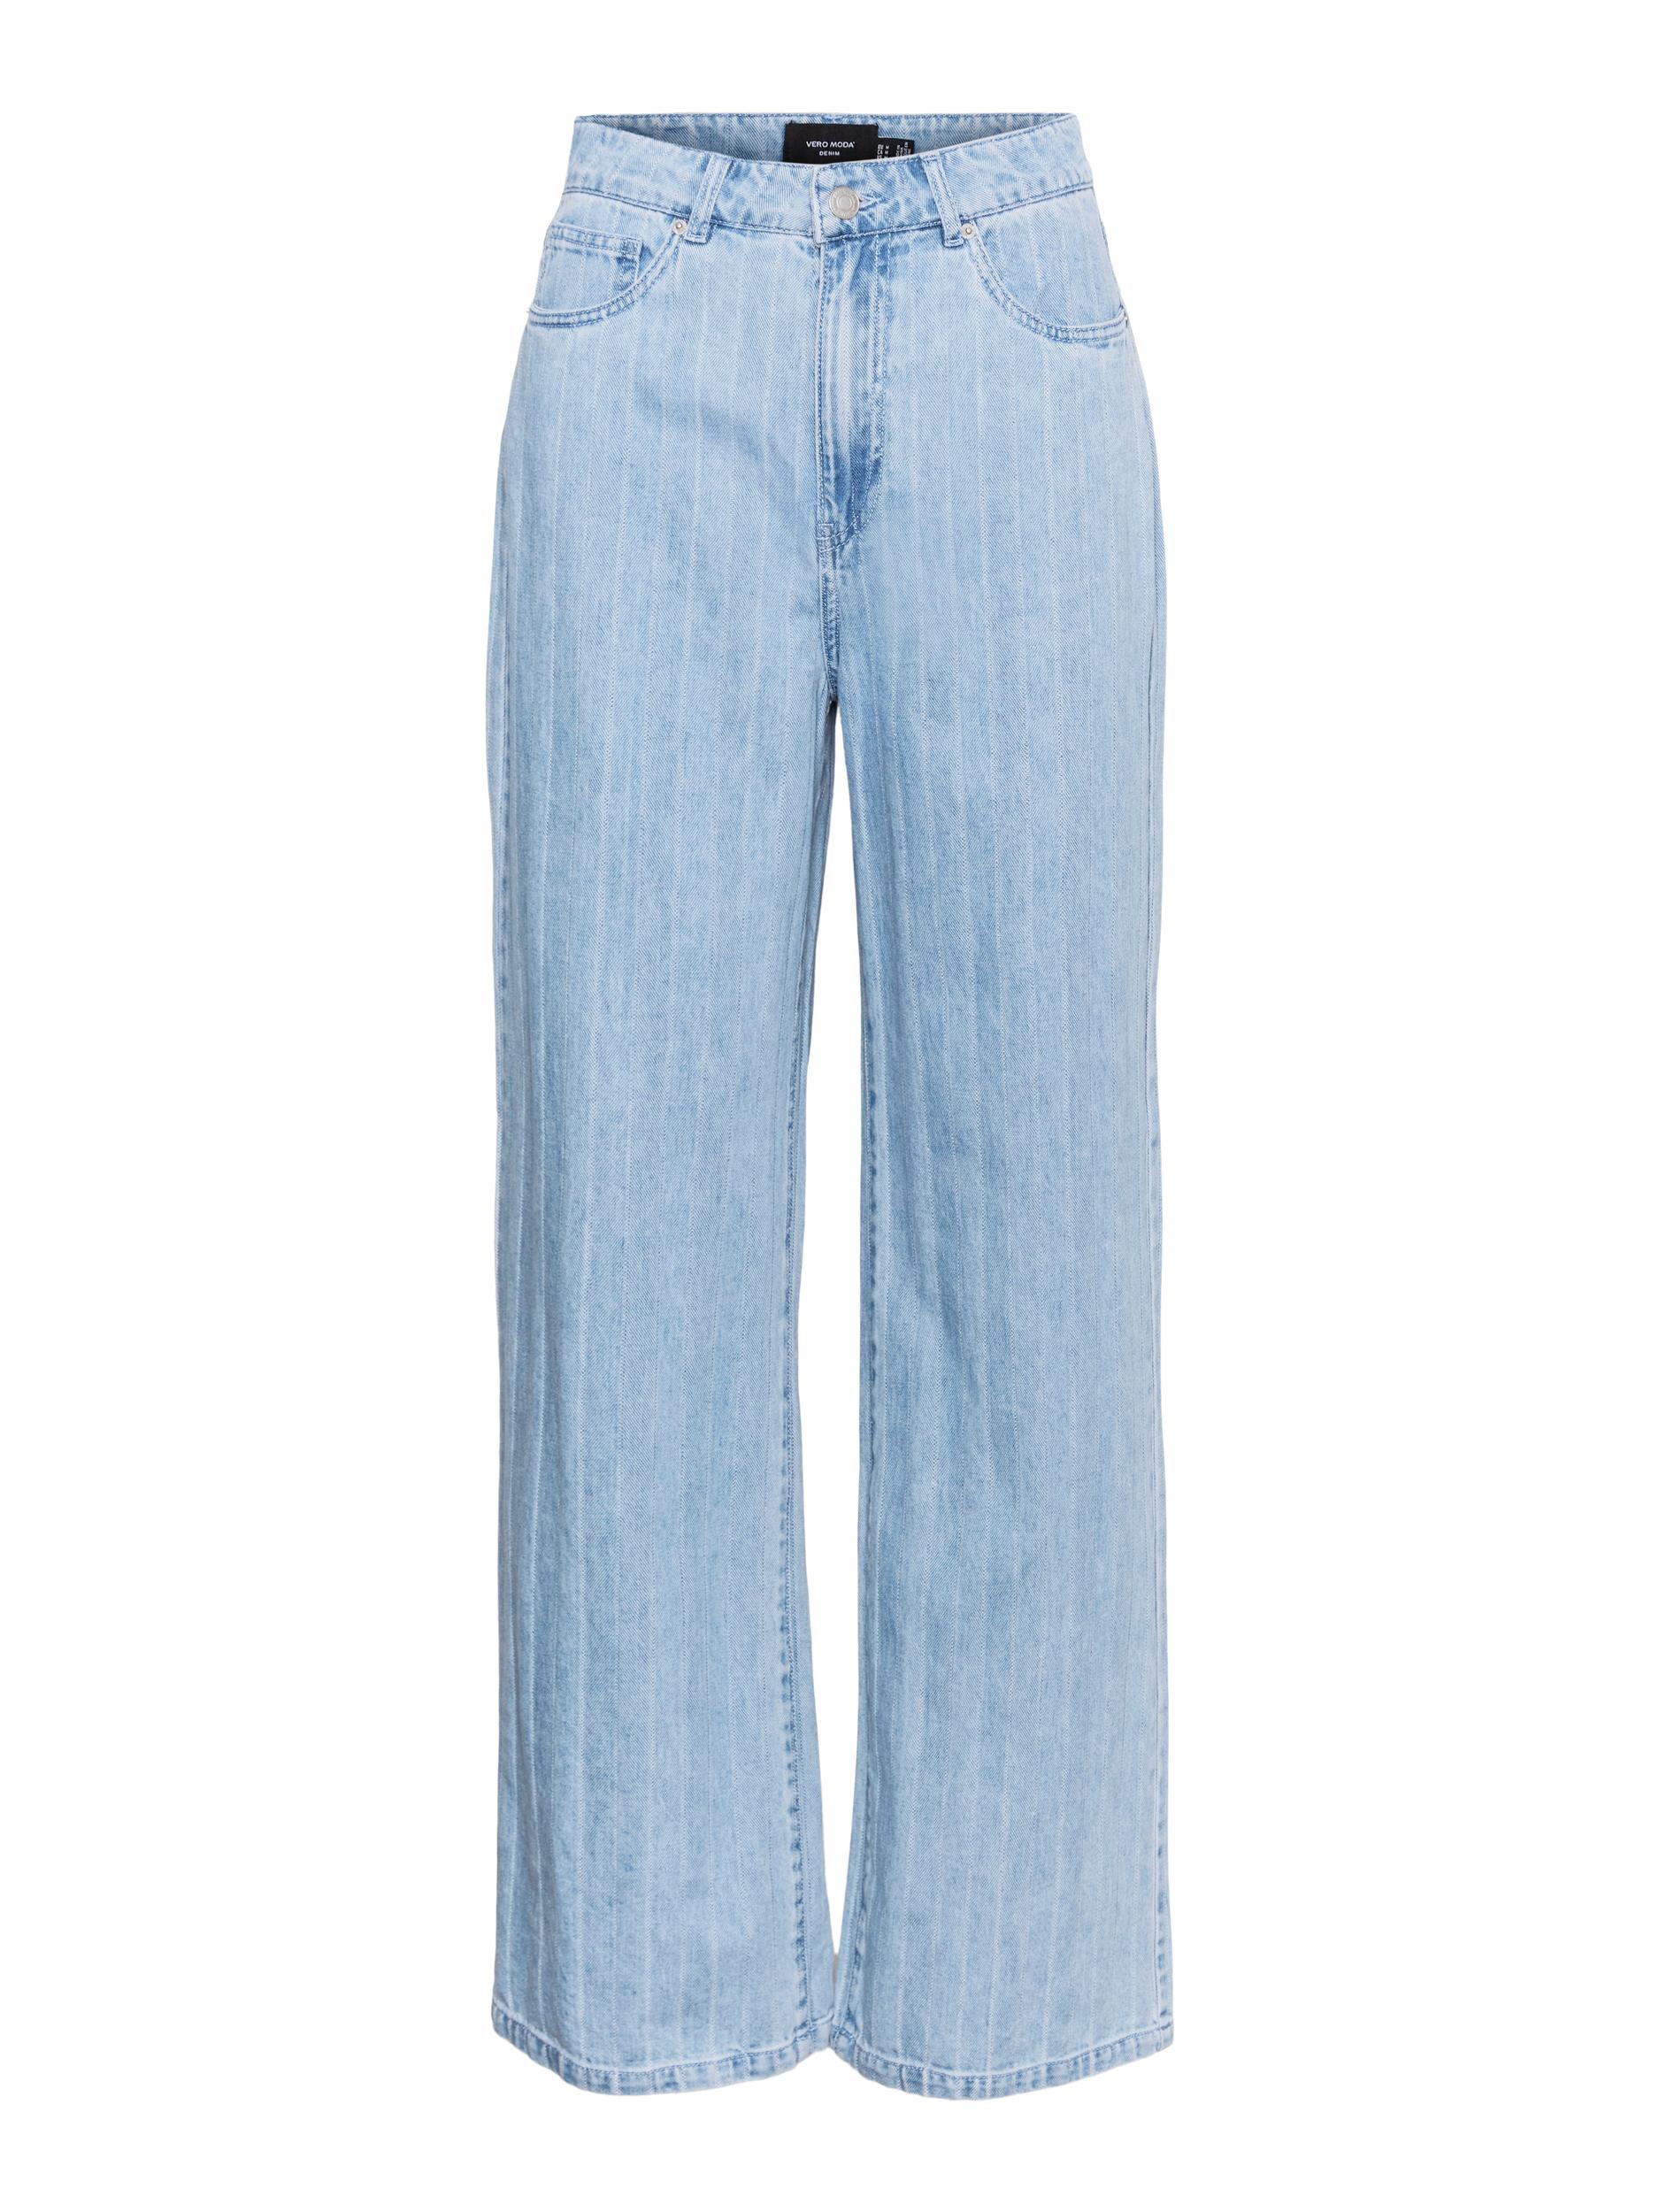 FINAL SALE - Kathy high waist wide leg fit jeans, LIGHT BLUE DENIM, large